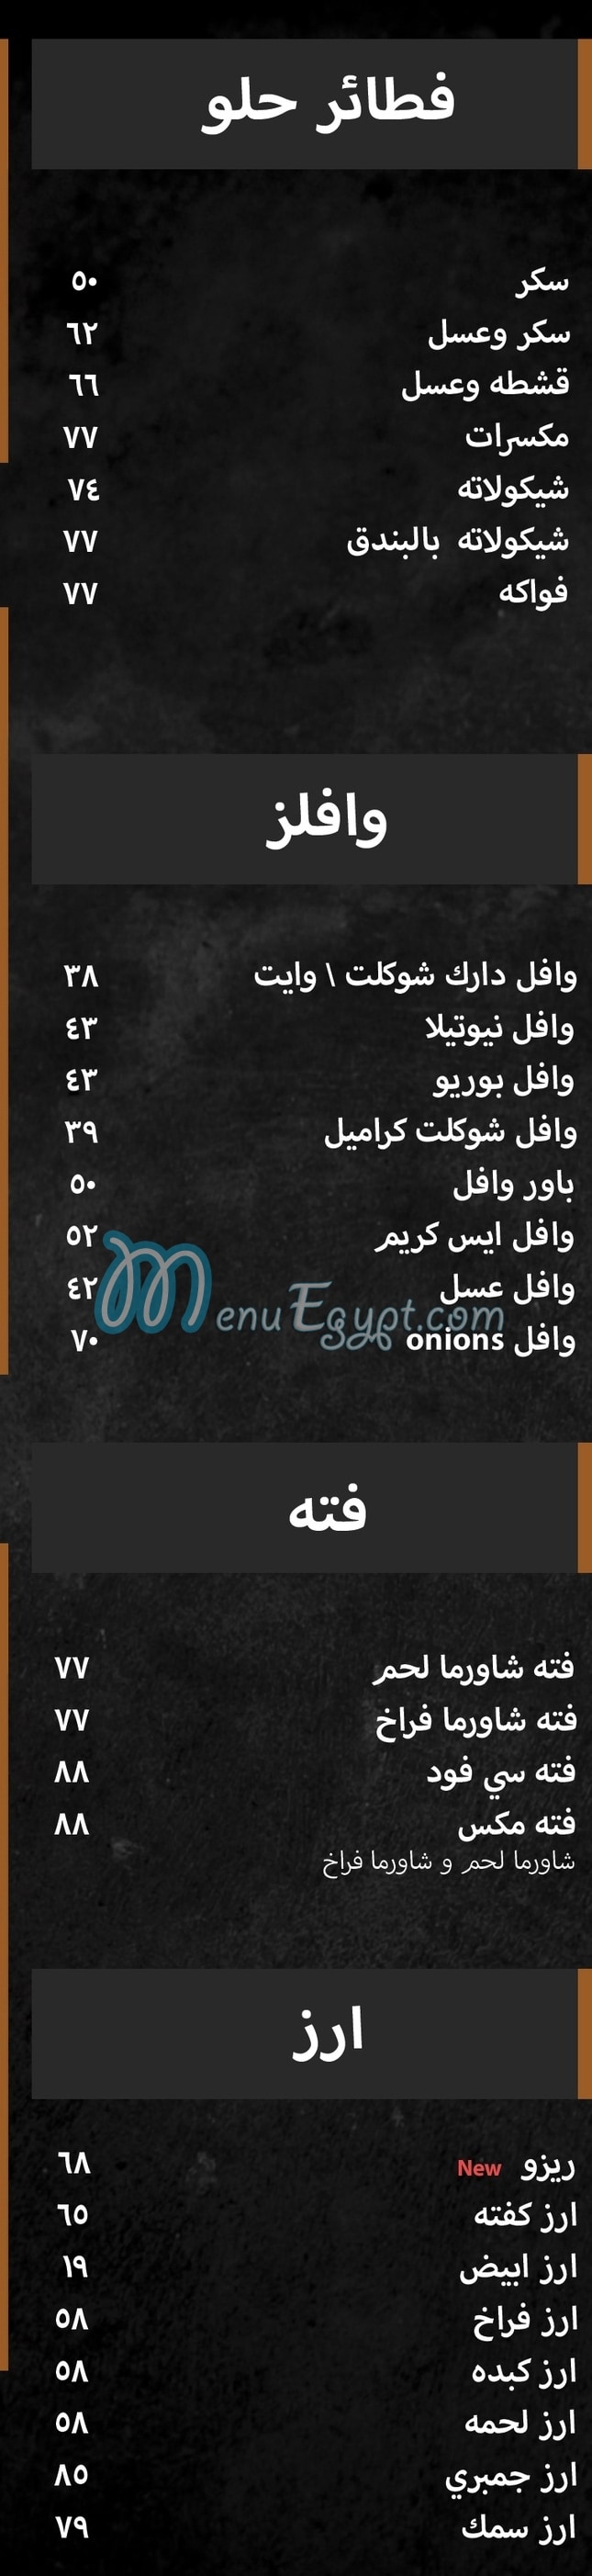 Onions menu Egypt 4